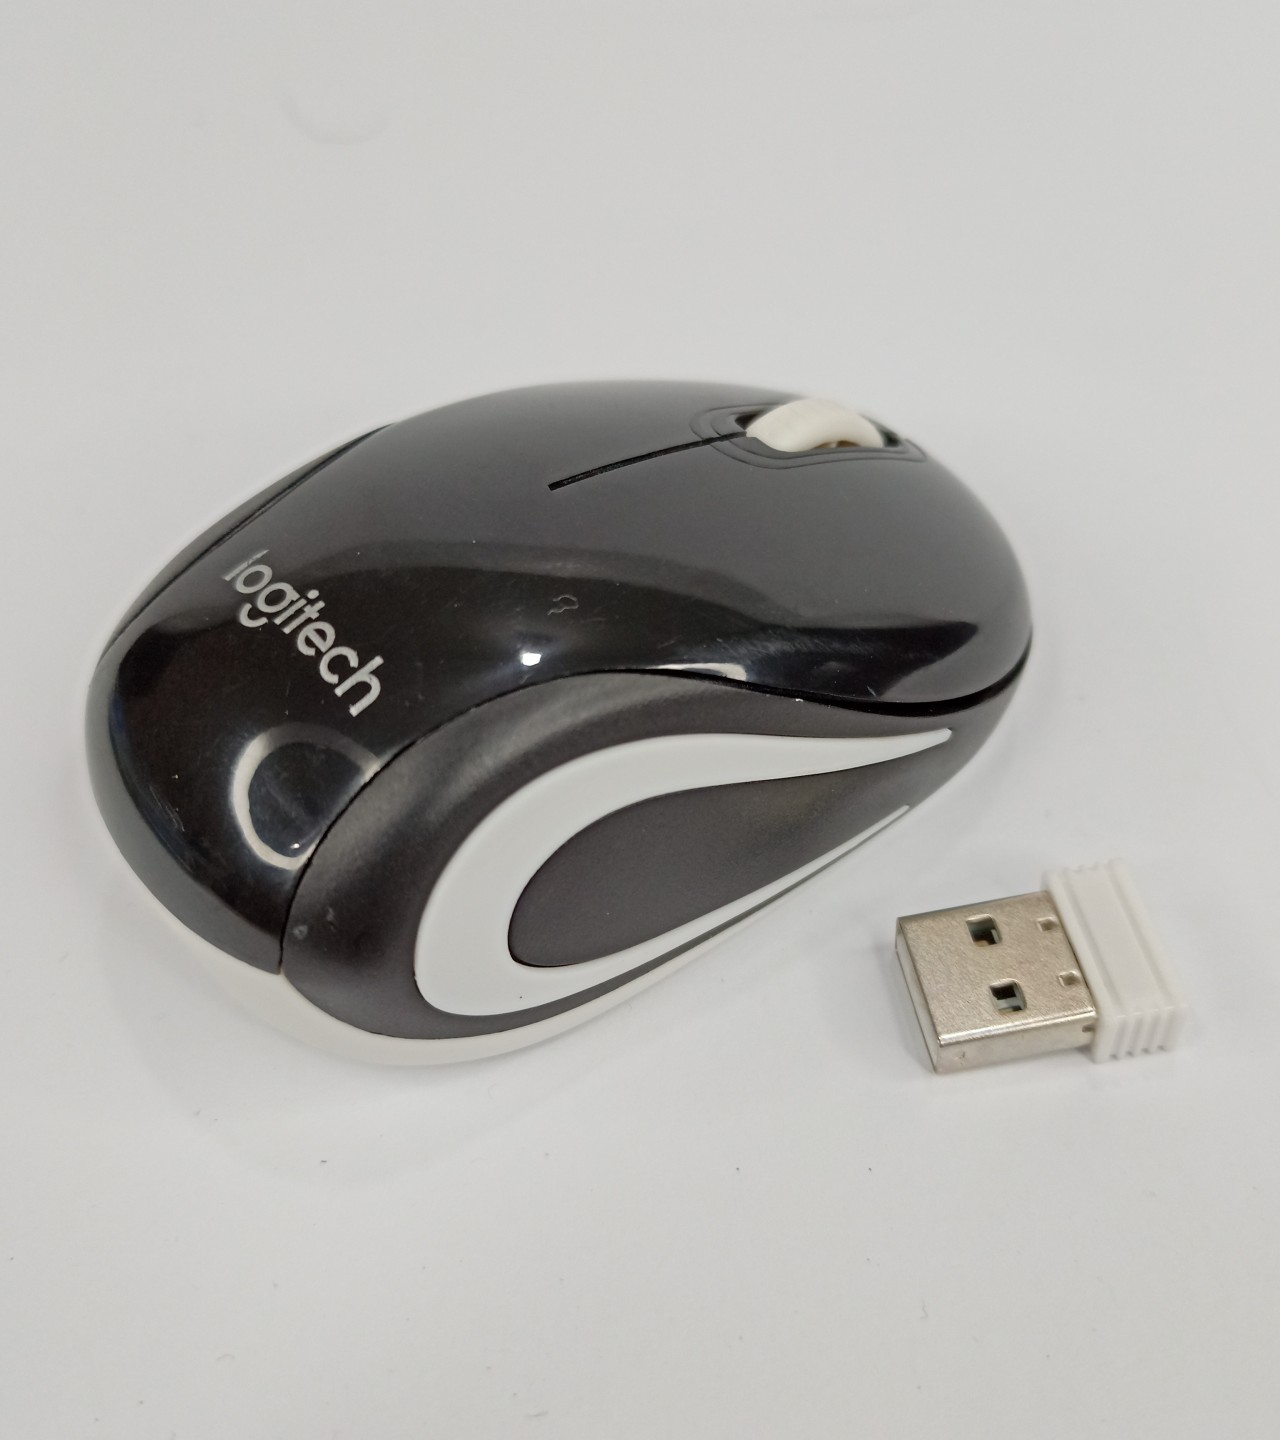 Logitech M186 Wireless Mouse High Copy